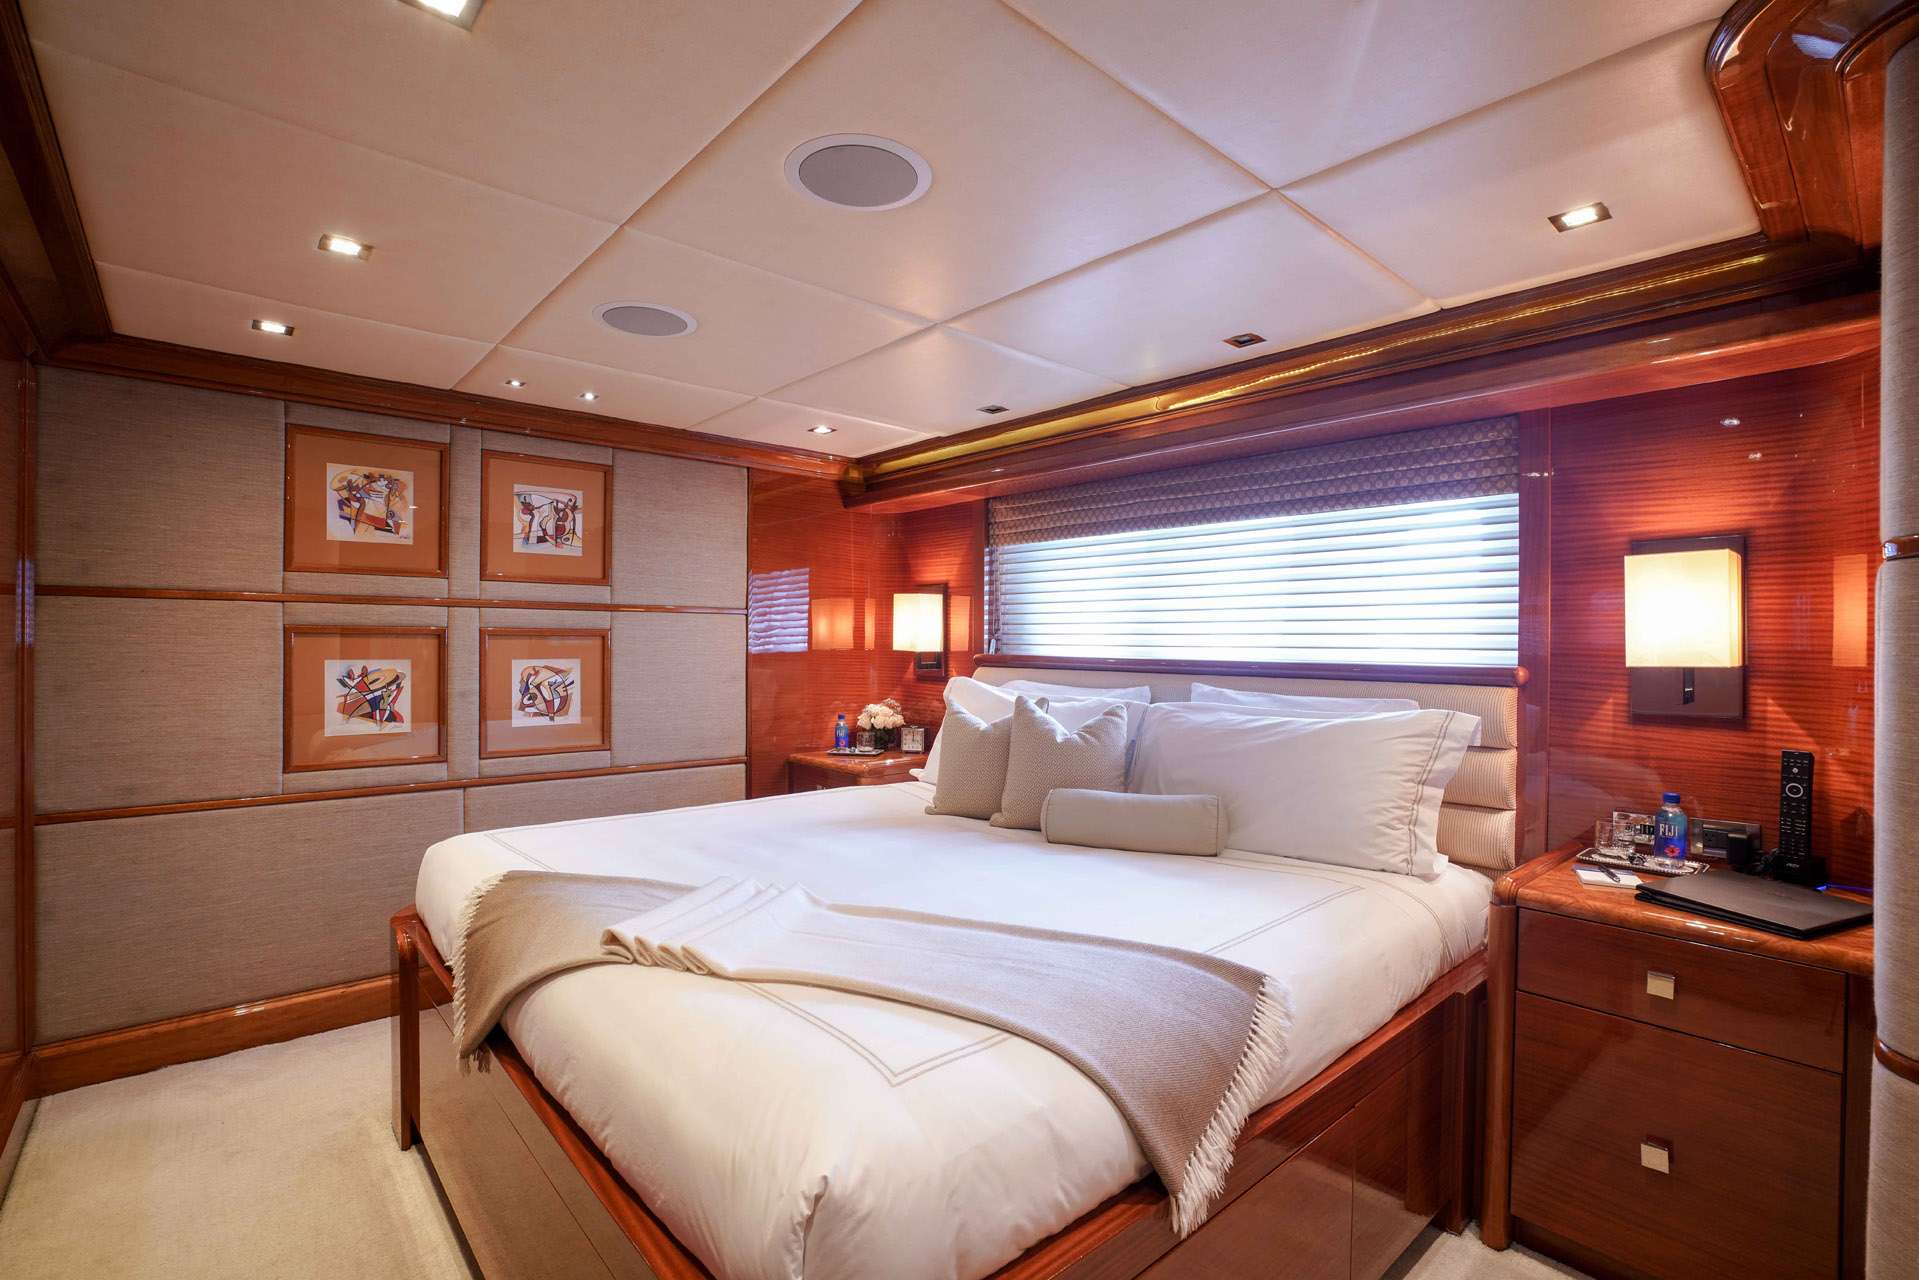 Motor Yacht 'ASPEN ALTERNATIVE' VIP Stateroom, 10 PAX, 9 Crew, 164.00 Ft, 50.00 Meters, Built 2010, Trinity Yachts, Refit Year 2022